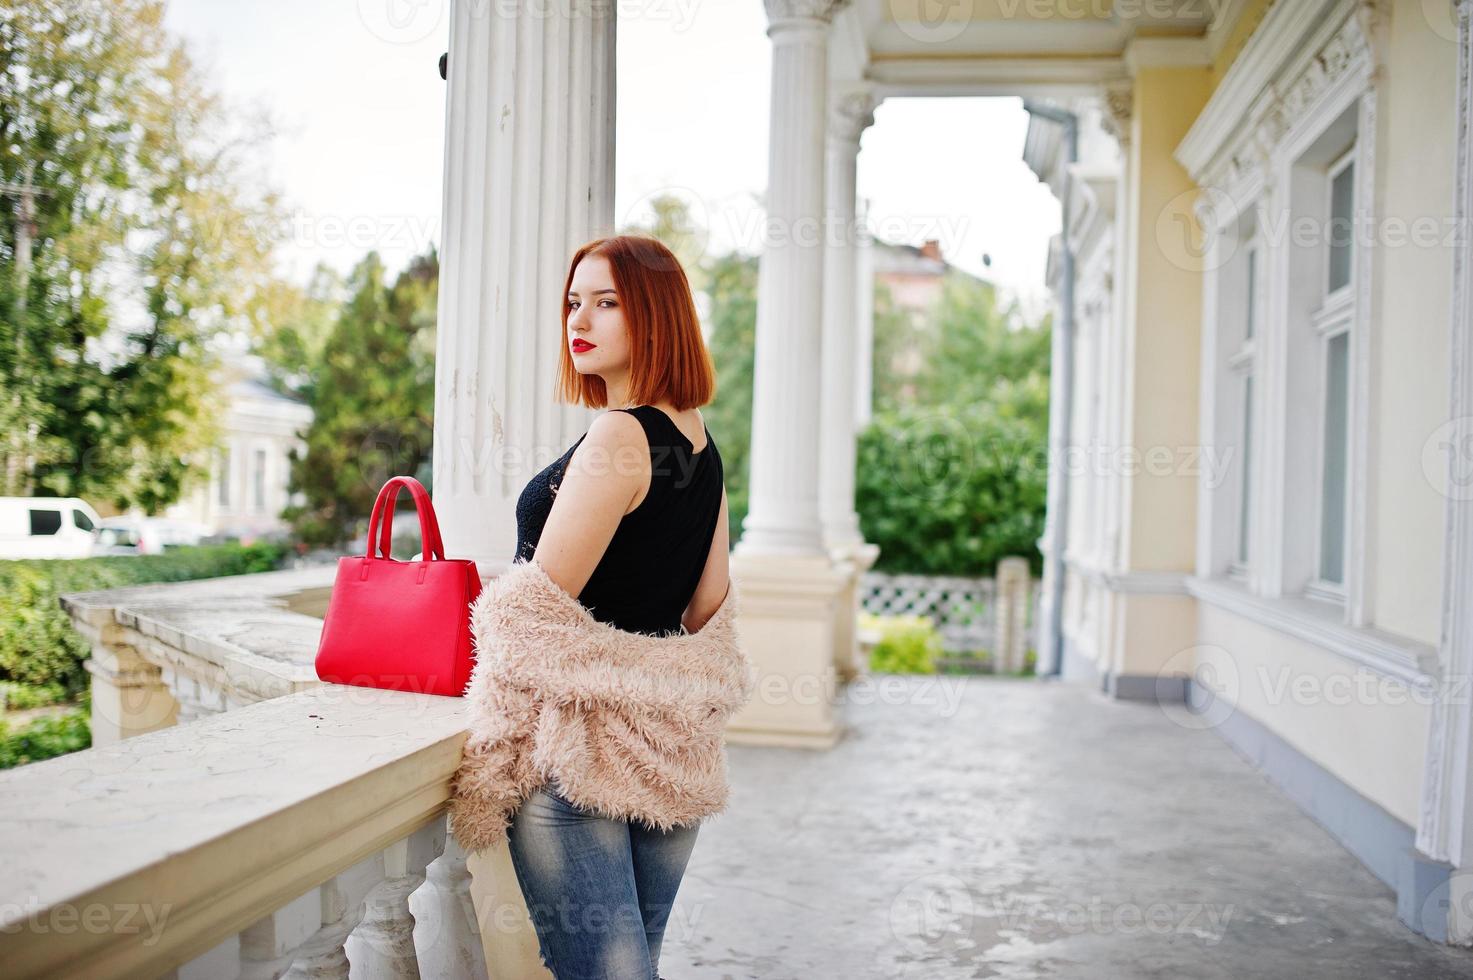 garota ruiva com bolsa vermelha posou perto de casa vintage. foto